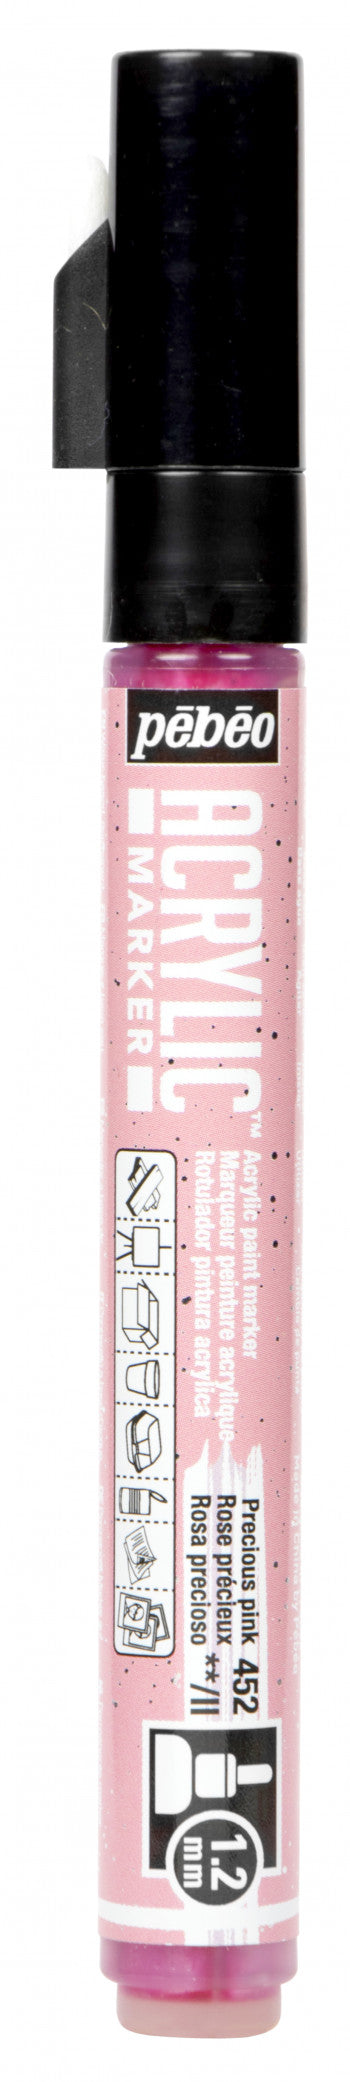 Acrylic Marker 1.2mm Pebeo Precious Rose - 452